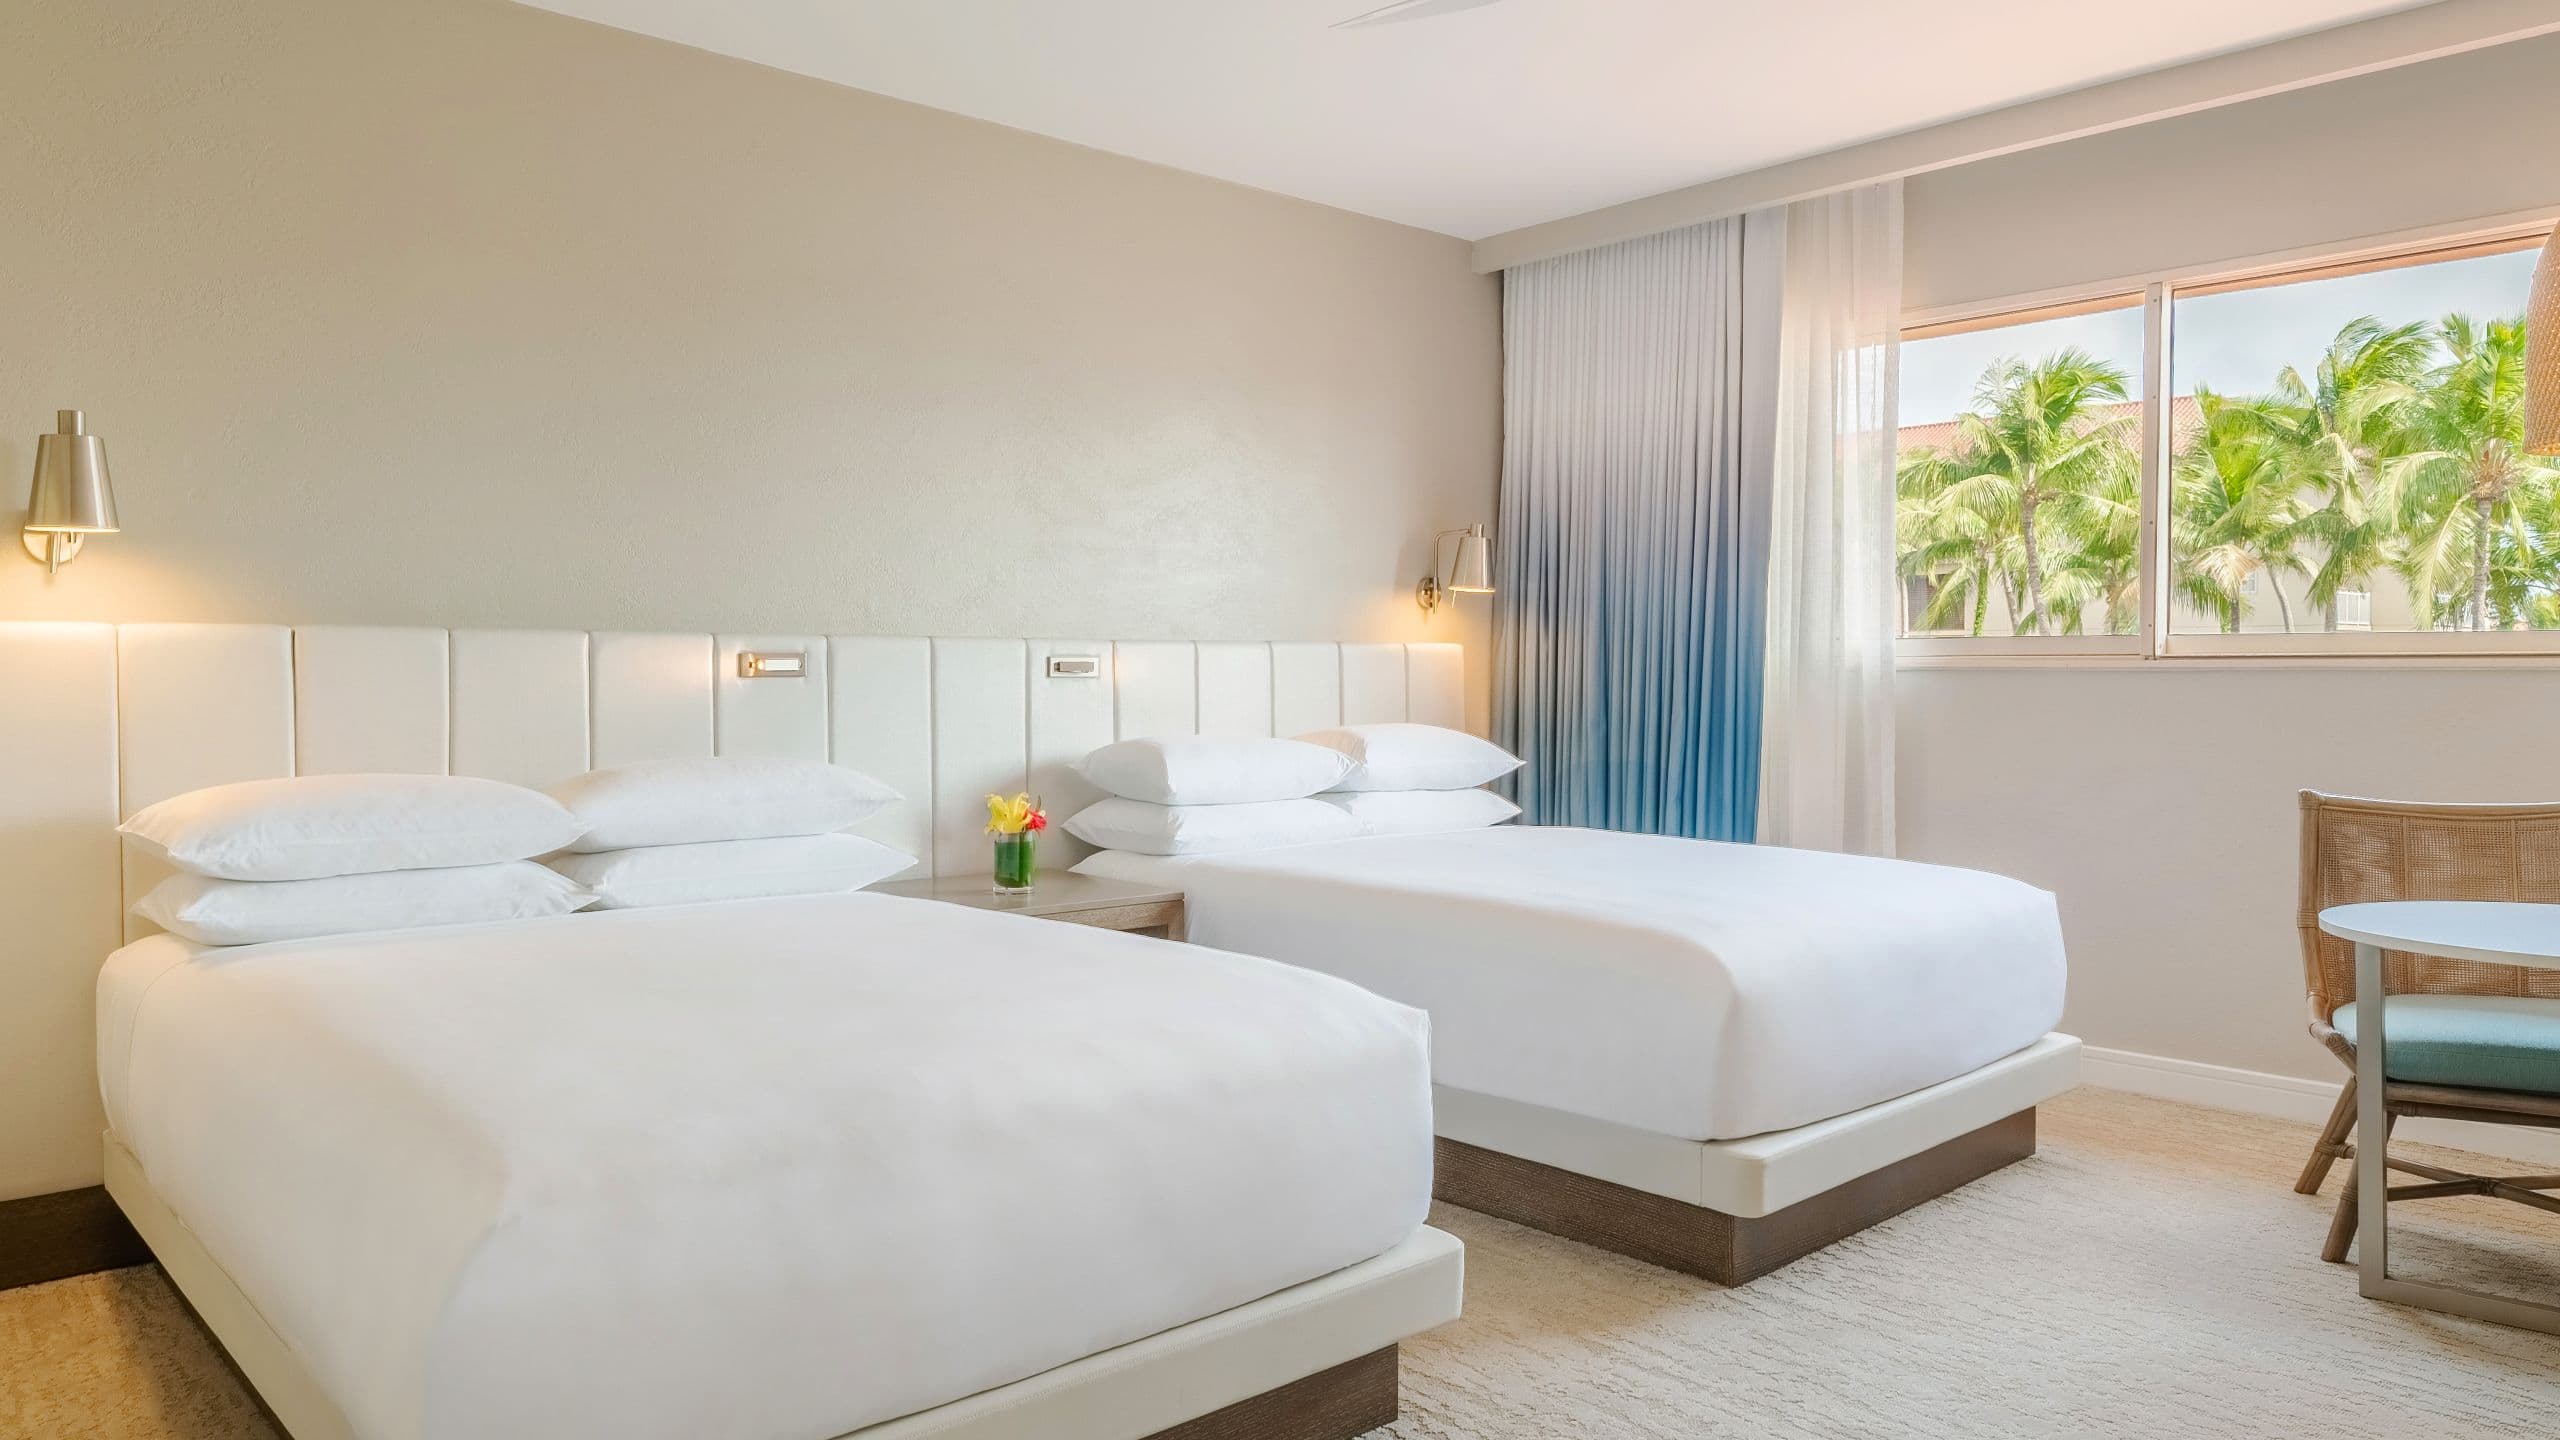 Hotel room with two beds at Hyatt Regency Aruba Resort Spa and Casino